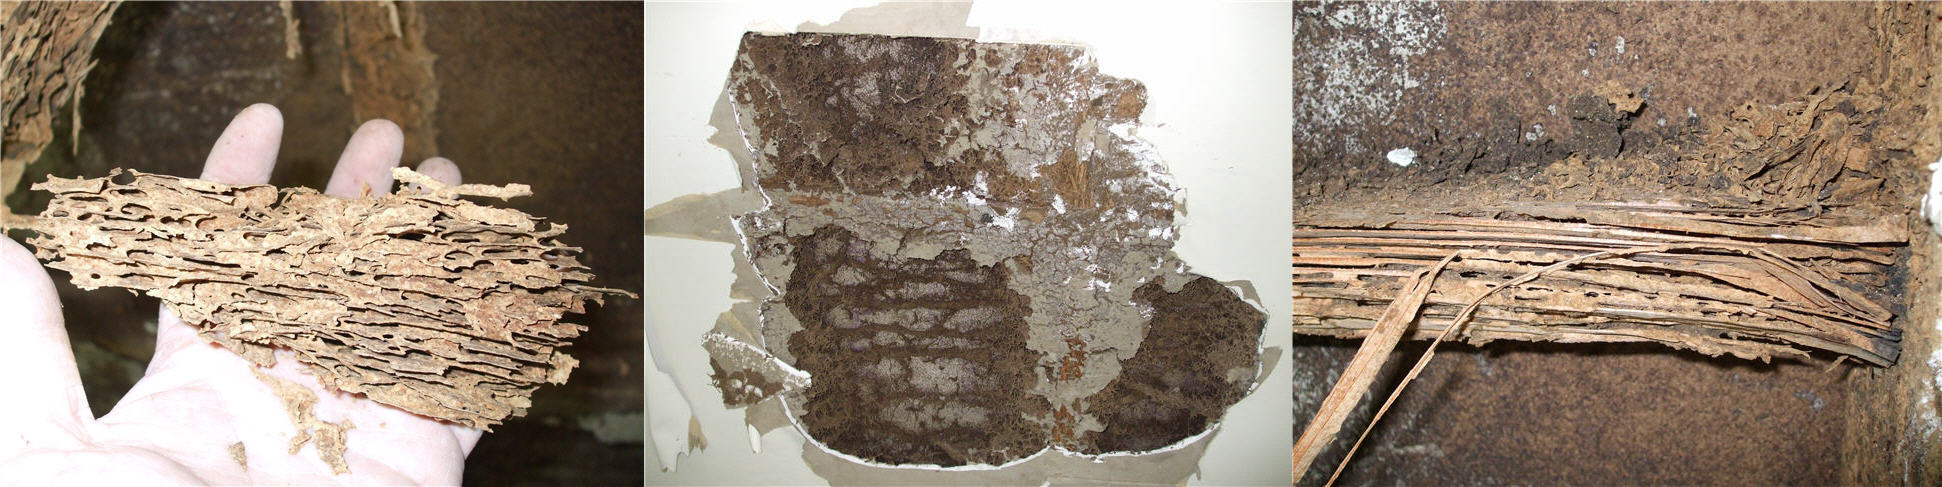 Termite pest control sydney- banner 3